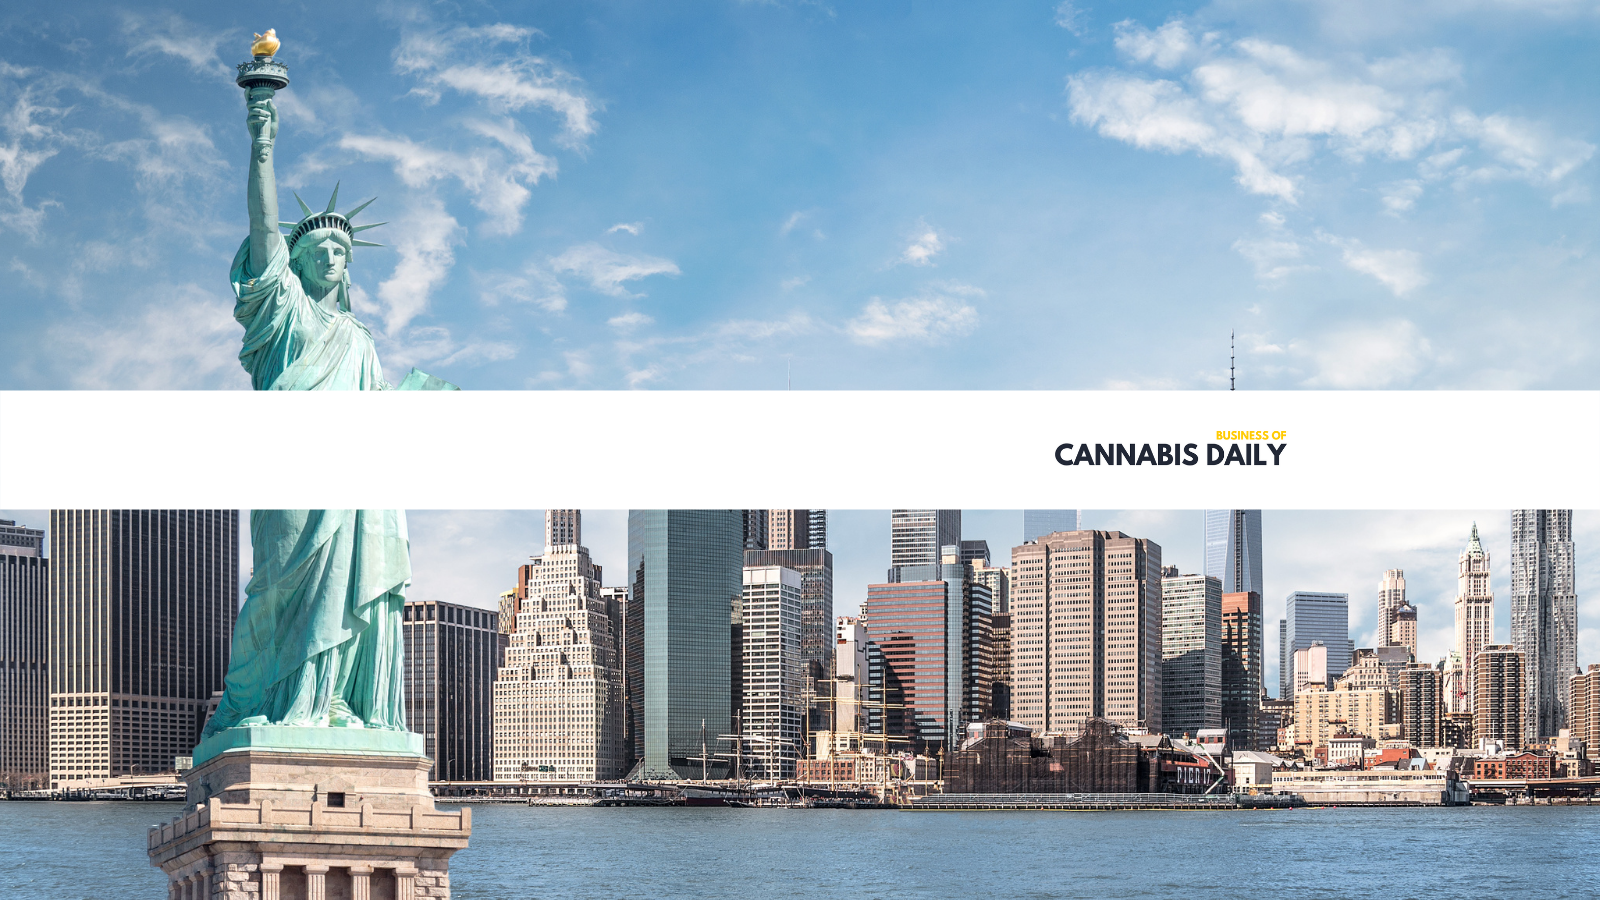 cannabis news has New York as the capital of the cannabis industry